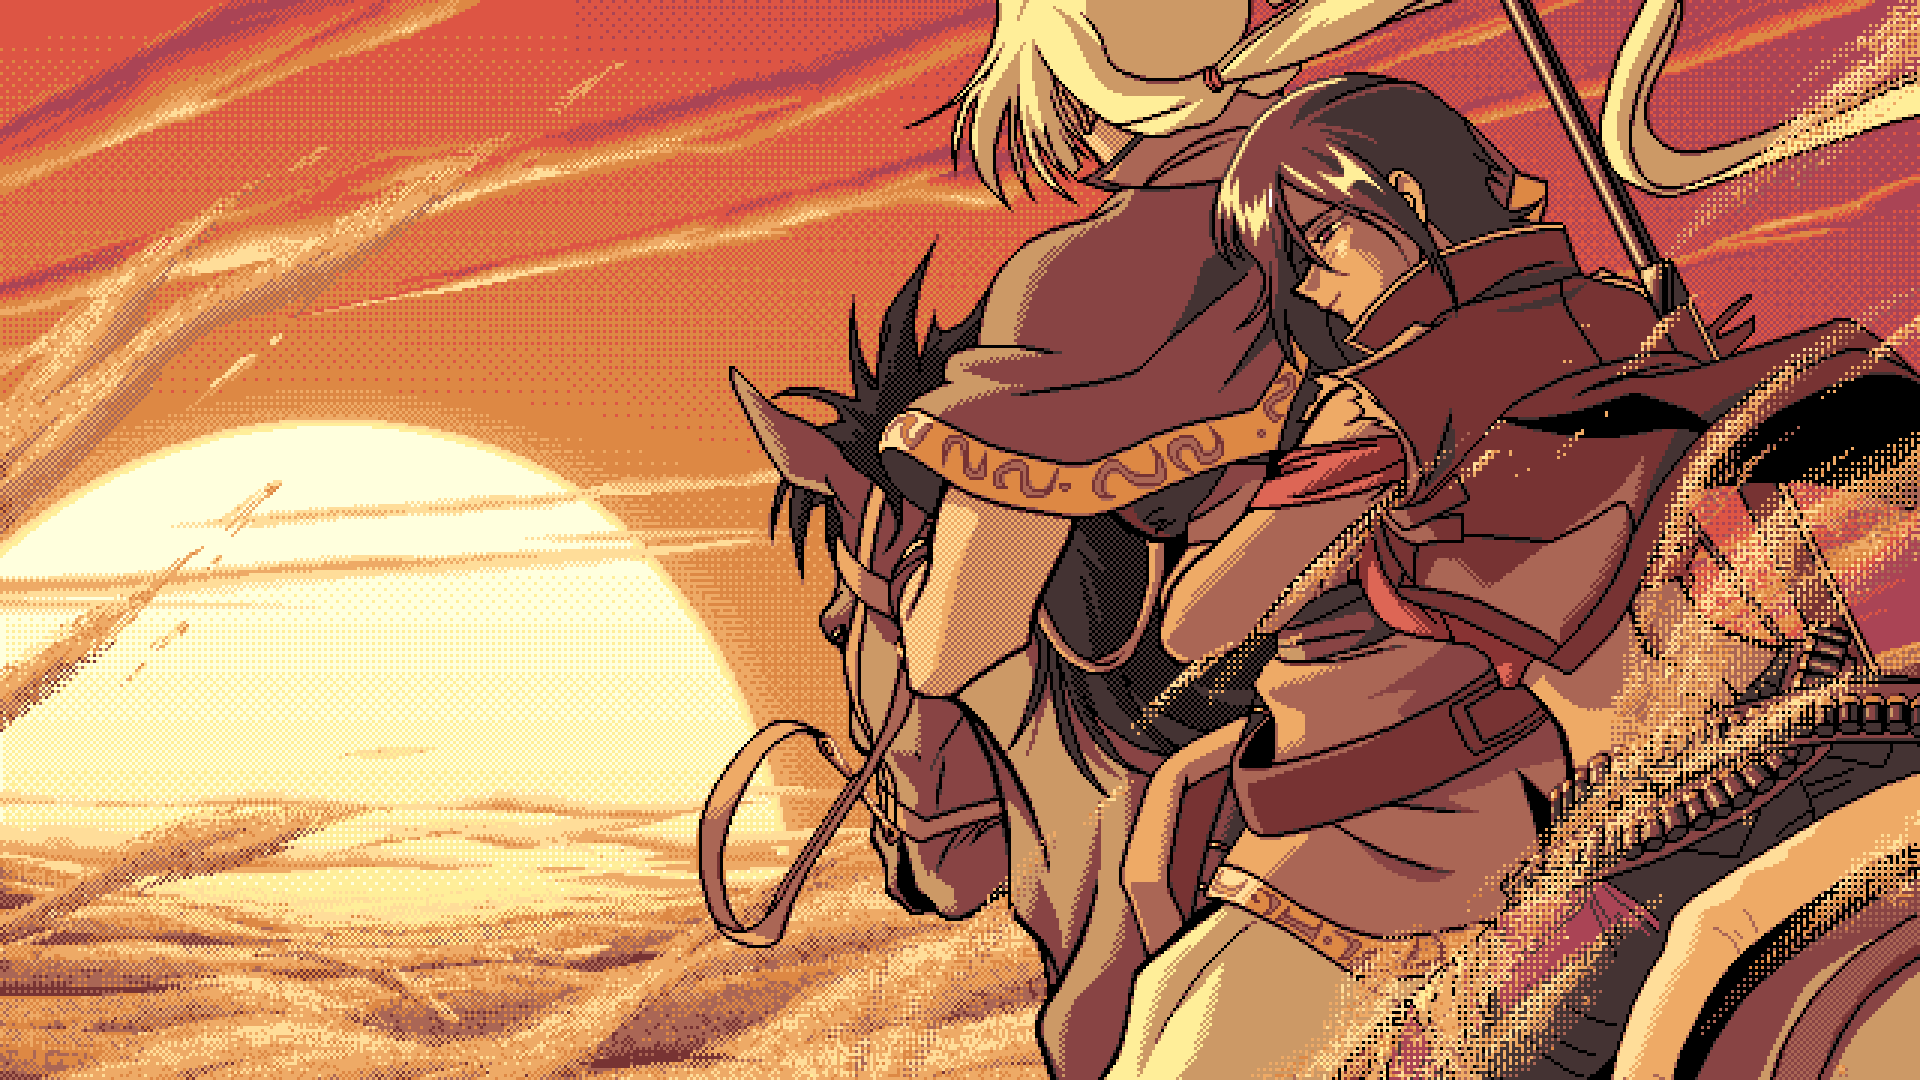 Pixel Art Game CG Anime Girls PC 98 Digital Art Smiling Sunset Sunset Glow Horse Horseback Anime Boy 1920x1080